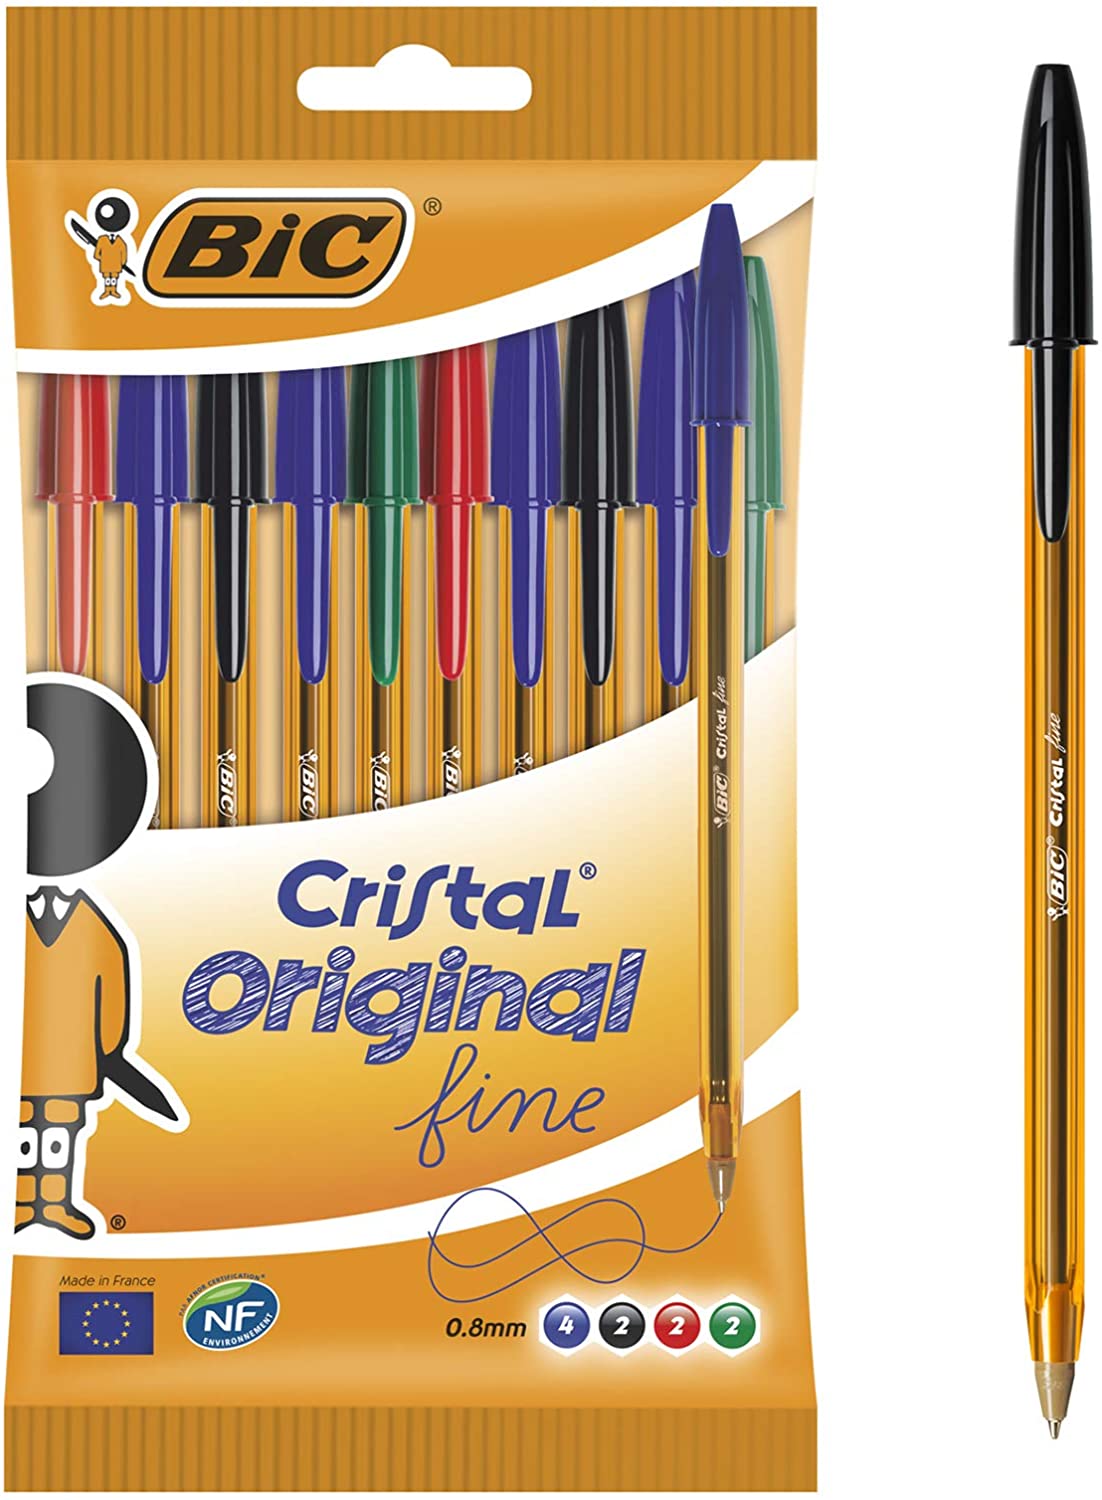 Stylo Bic Cristal Original Fine Ballpoint – 0.8mm Round – 0.30mm Pen Stroke  – Oil Based Ink – Orange Body – Blue Colour – Assorted Colors –  ECI-Solutions